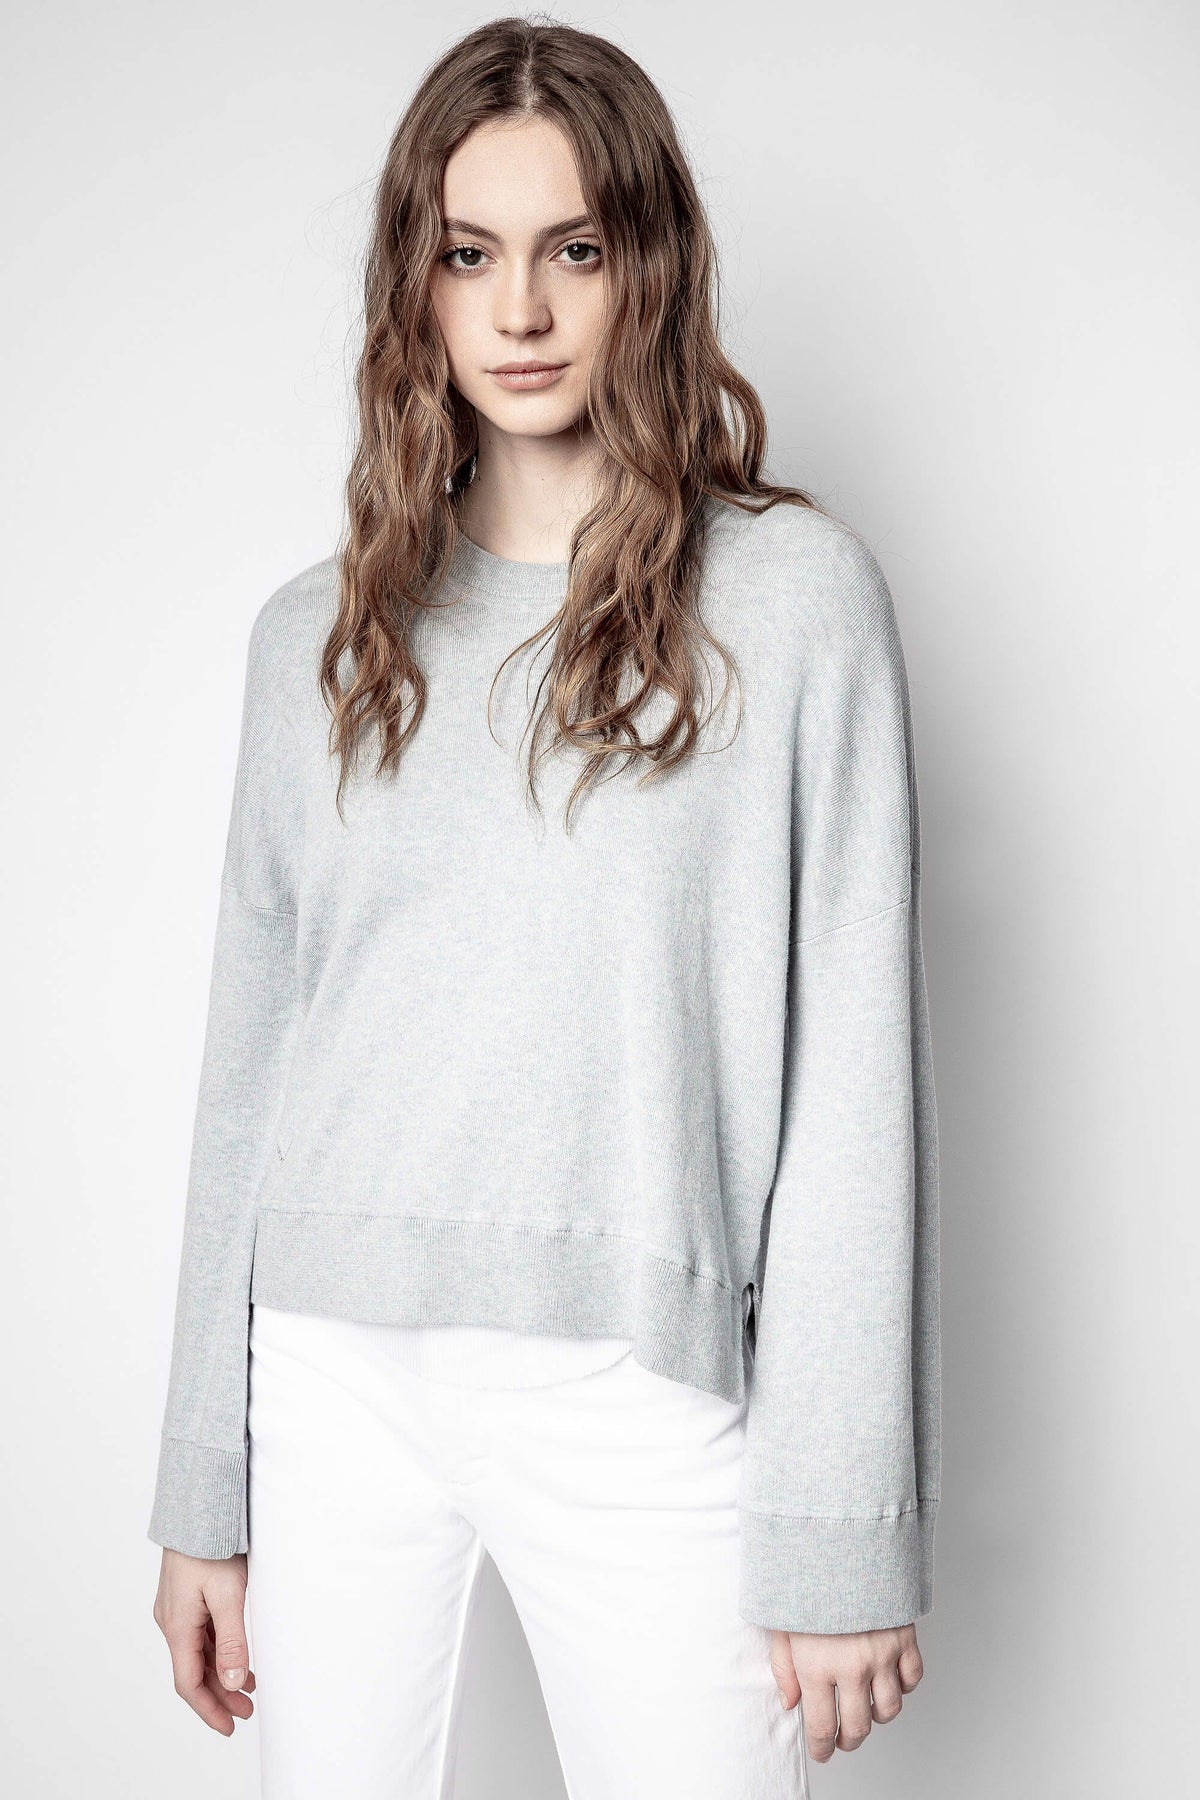 Zadig&Voltaire Livia Co Sweater | Shop Premium Outlets